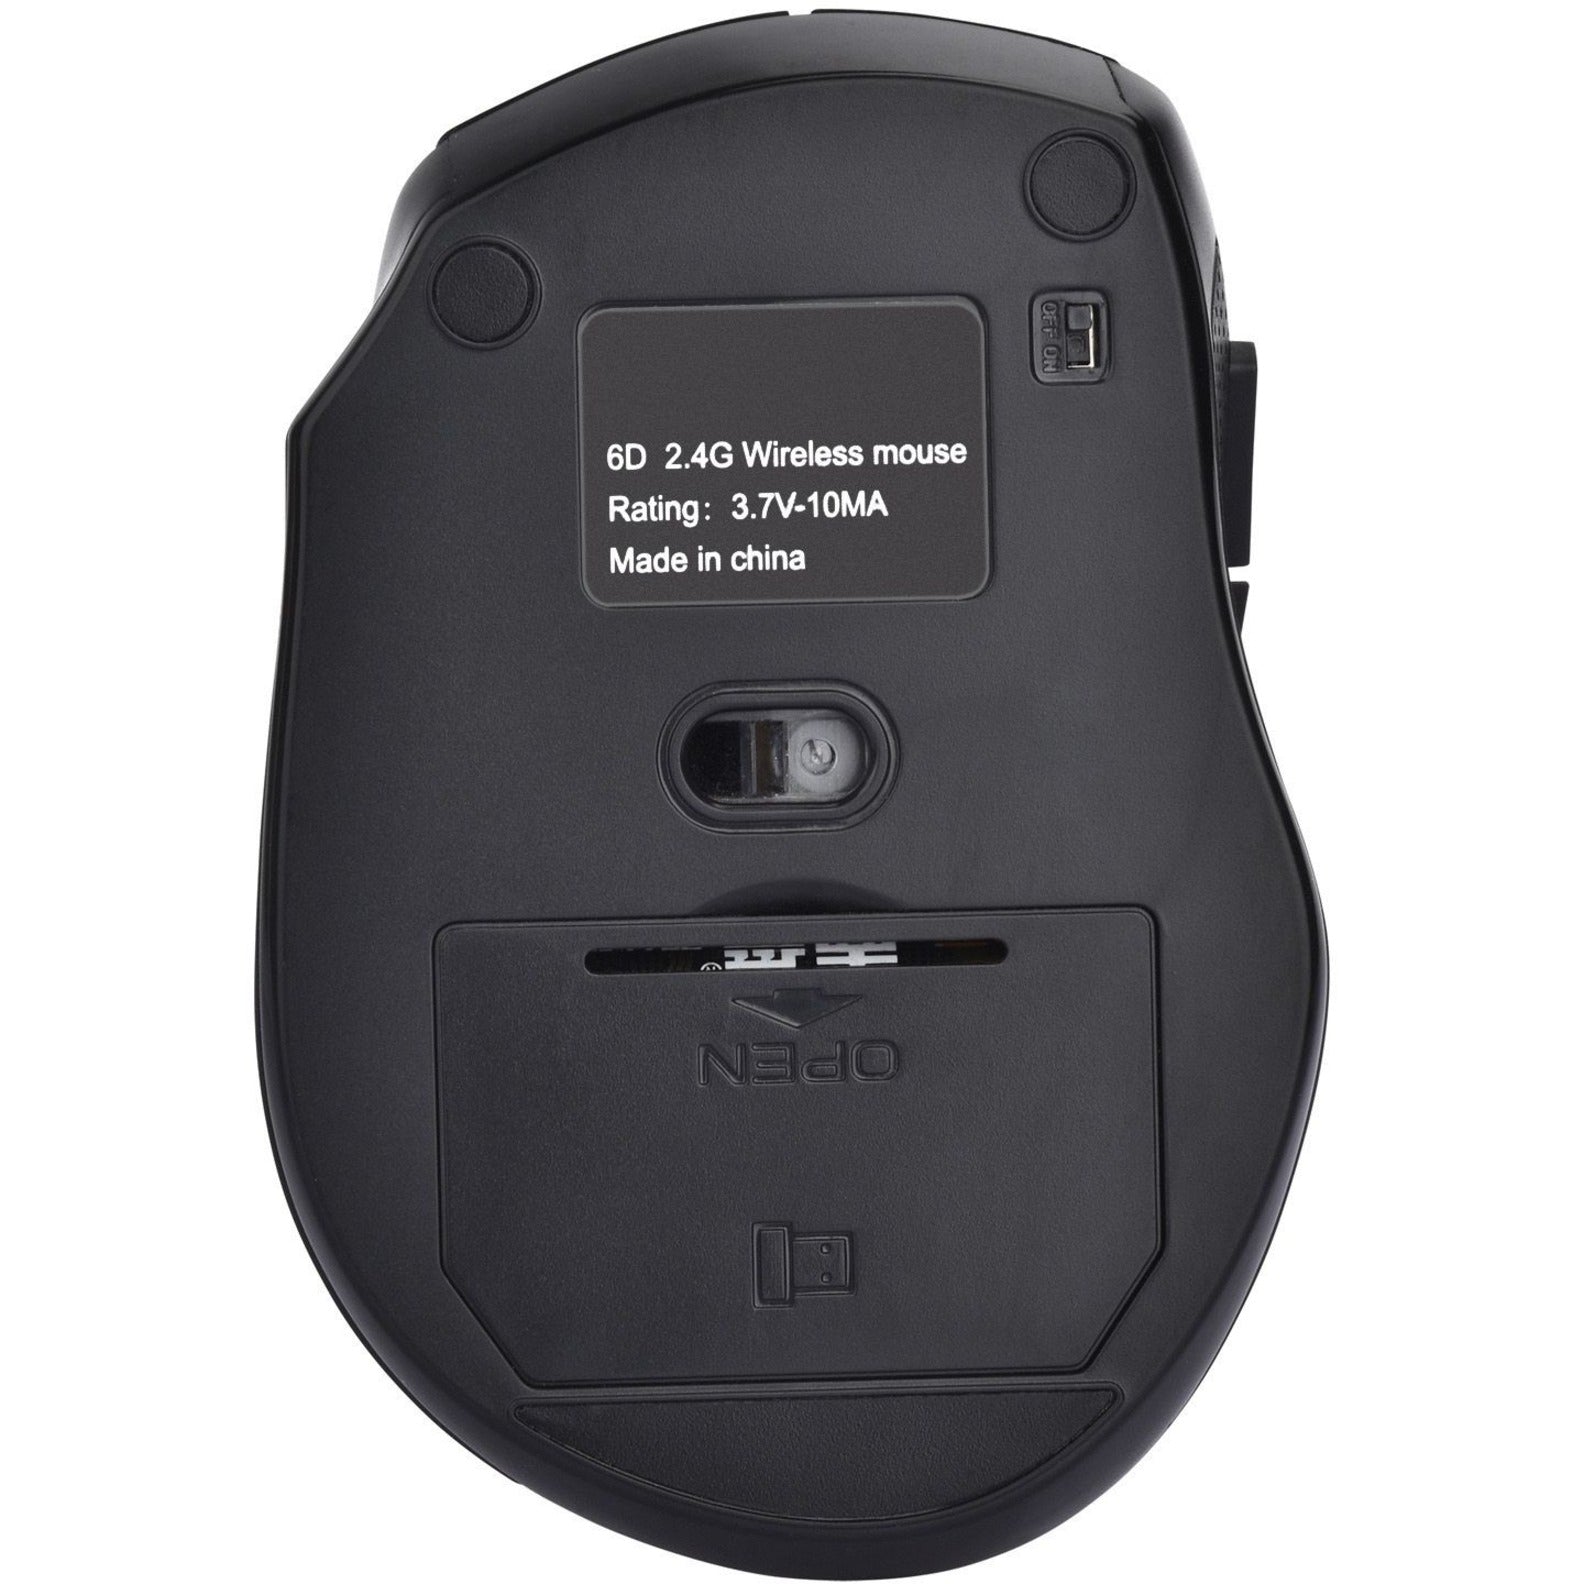 4XEM 4XWLSMS1 20FT Range Wireless Mouse, Ergonomic Fit, 2.4 GHz RF, 5 Buttons